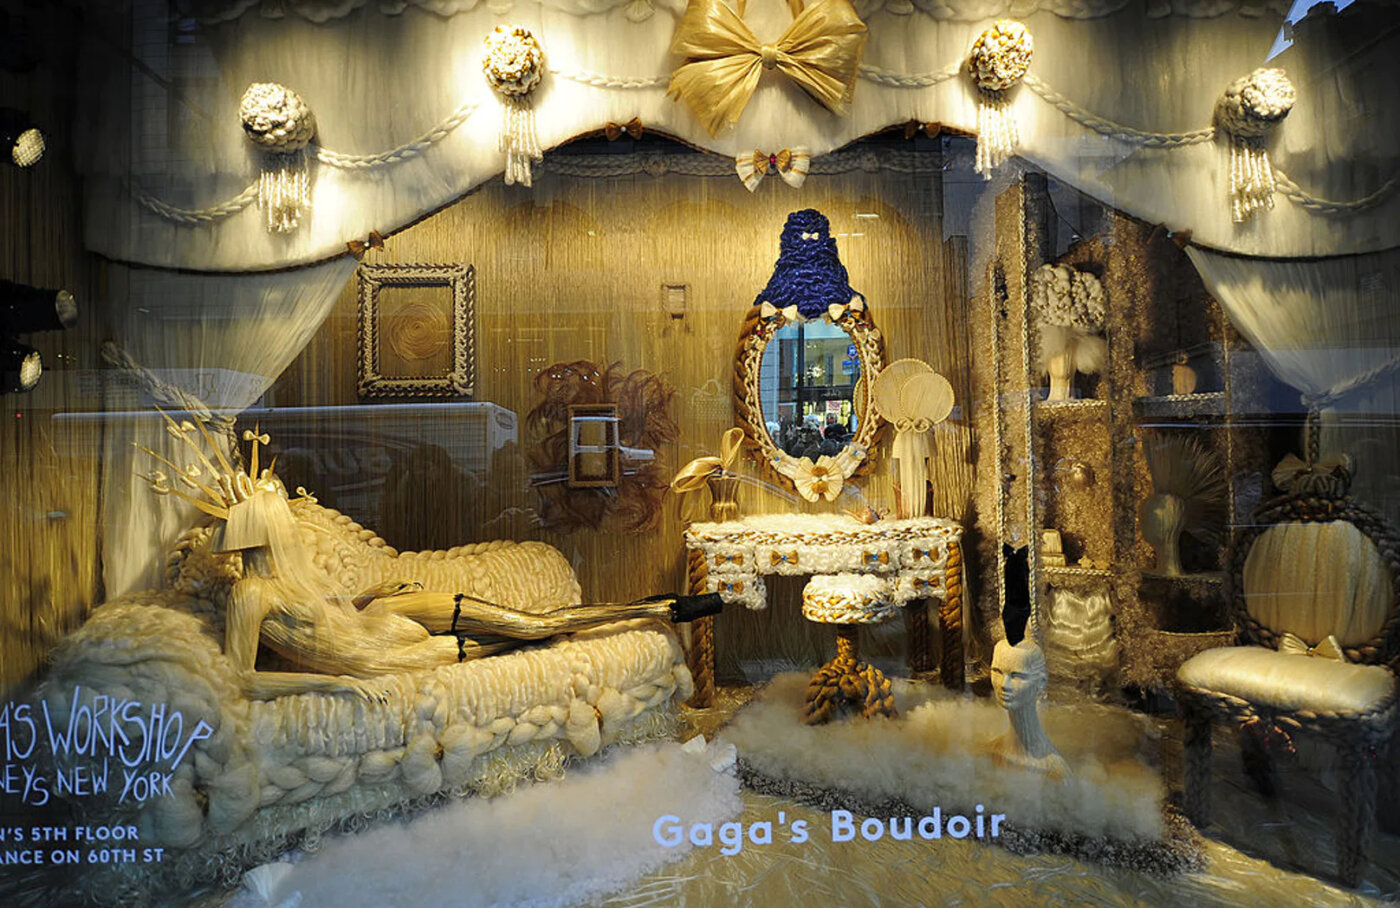 Goudeneeuw: The vanishing art of department store Christmas windows